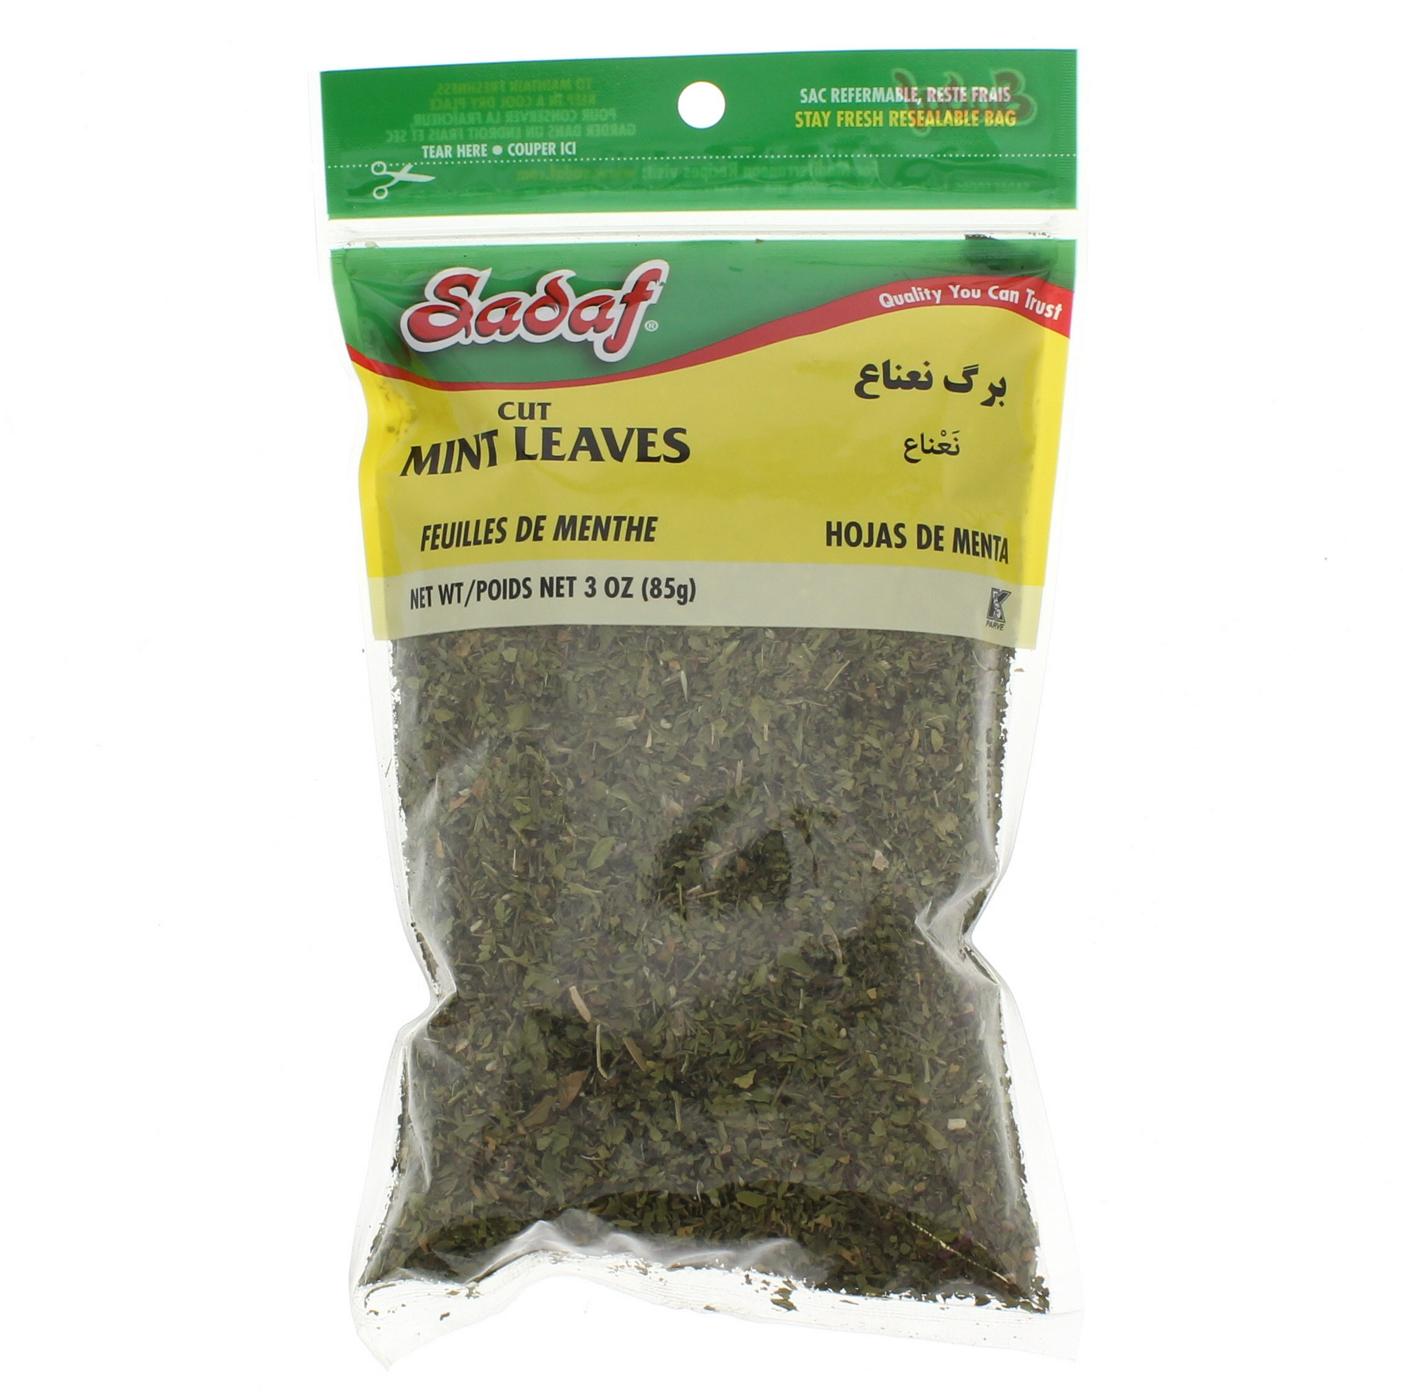 Sadaf Cut Mint Leaves; image 1 of 2